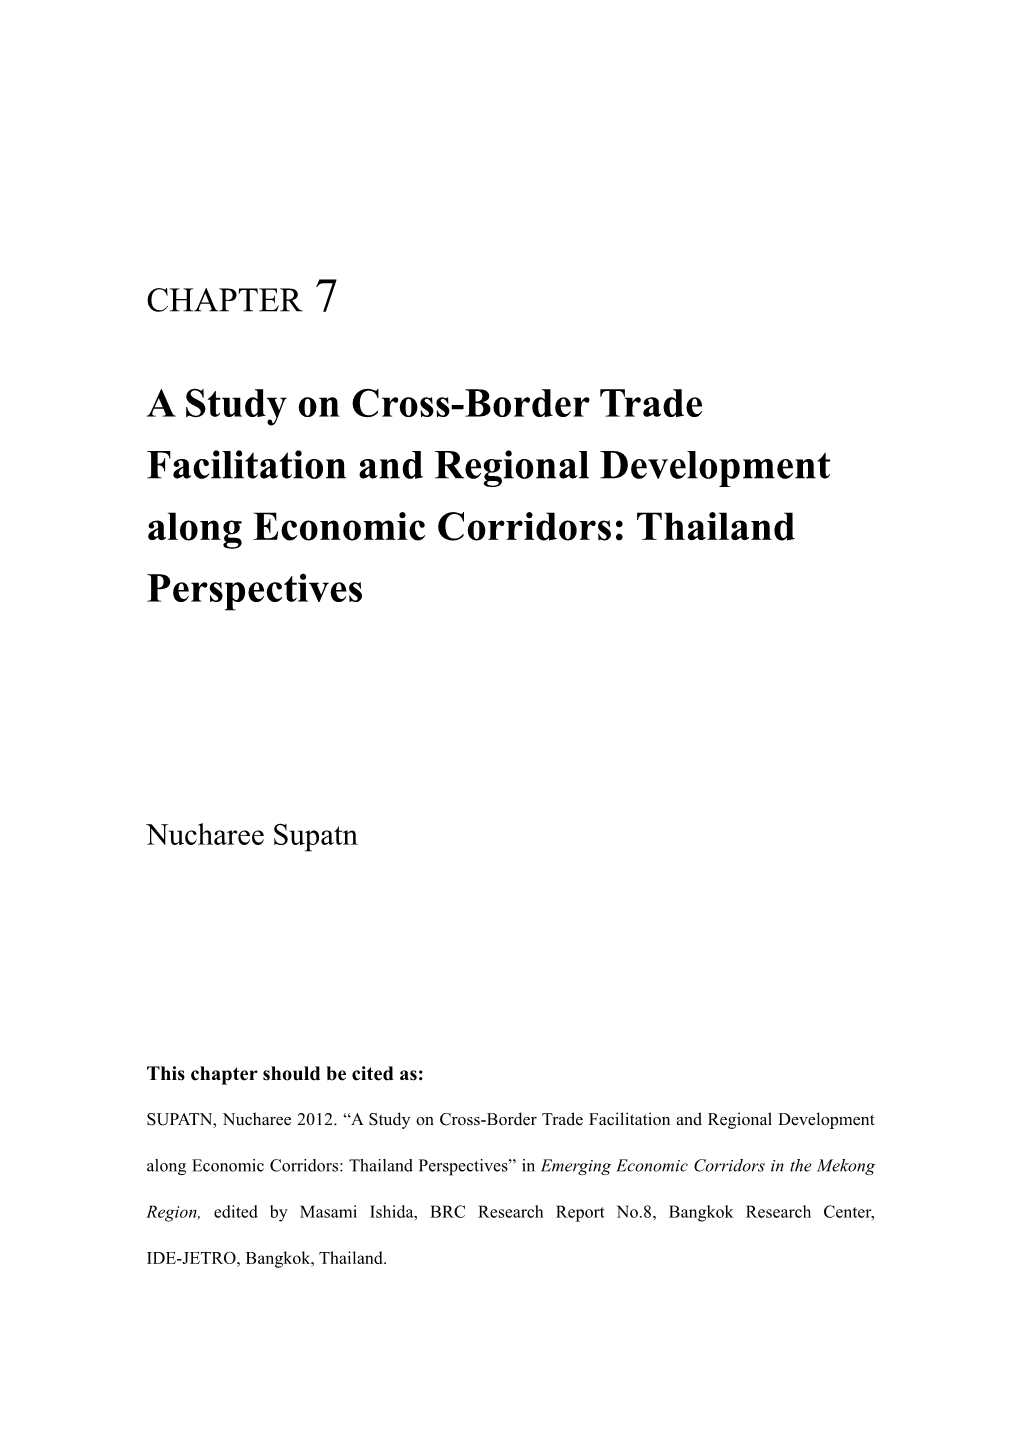 A Study on Cross-Border Trade Facilitation and Regional Development Along Economic Corridors: Thailand Perspectives